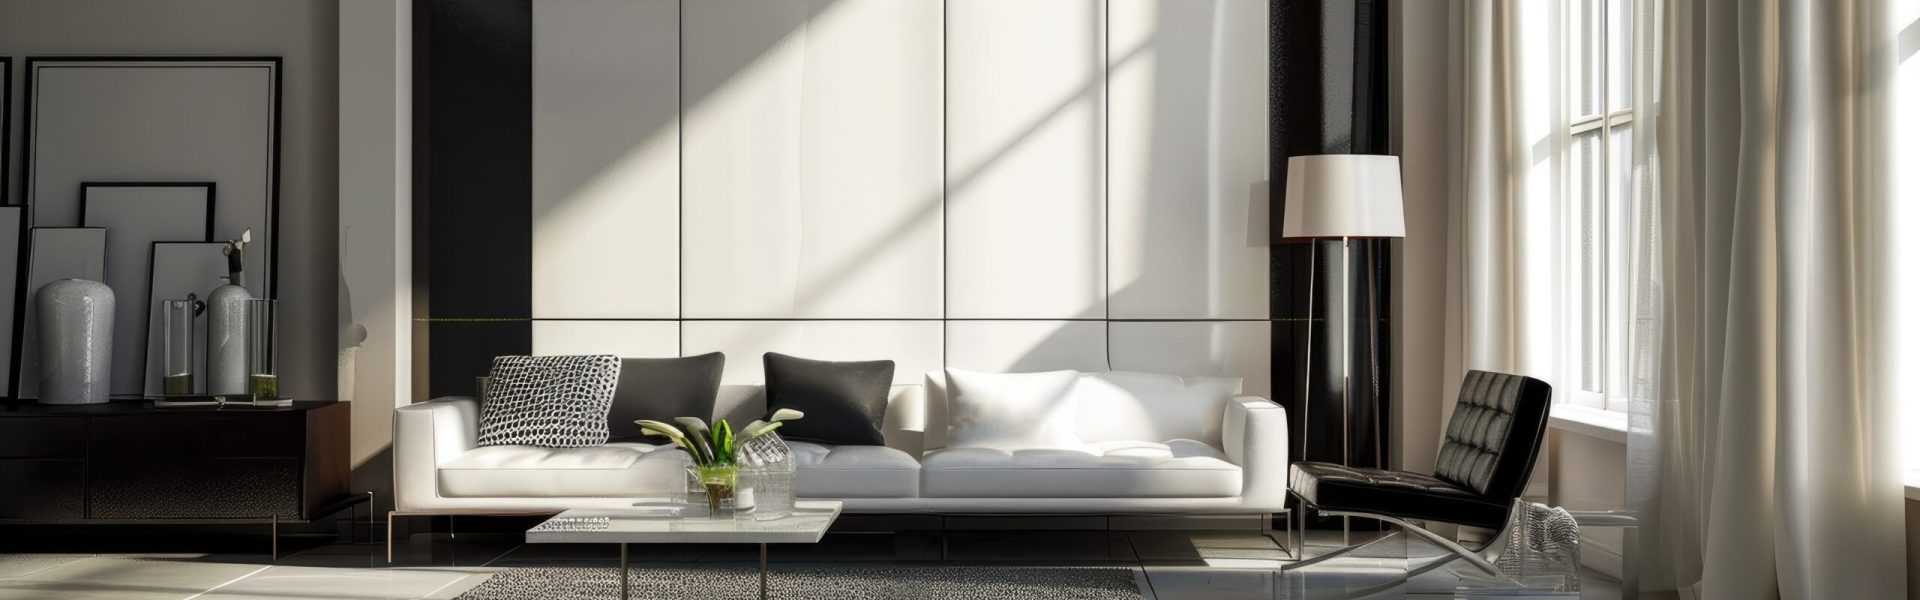 Modern interior design backdrop with minimalist decor, sleek furniture.